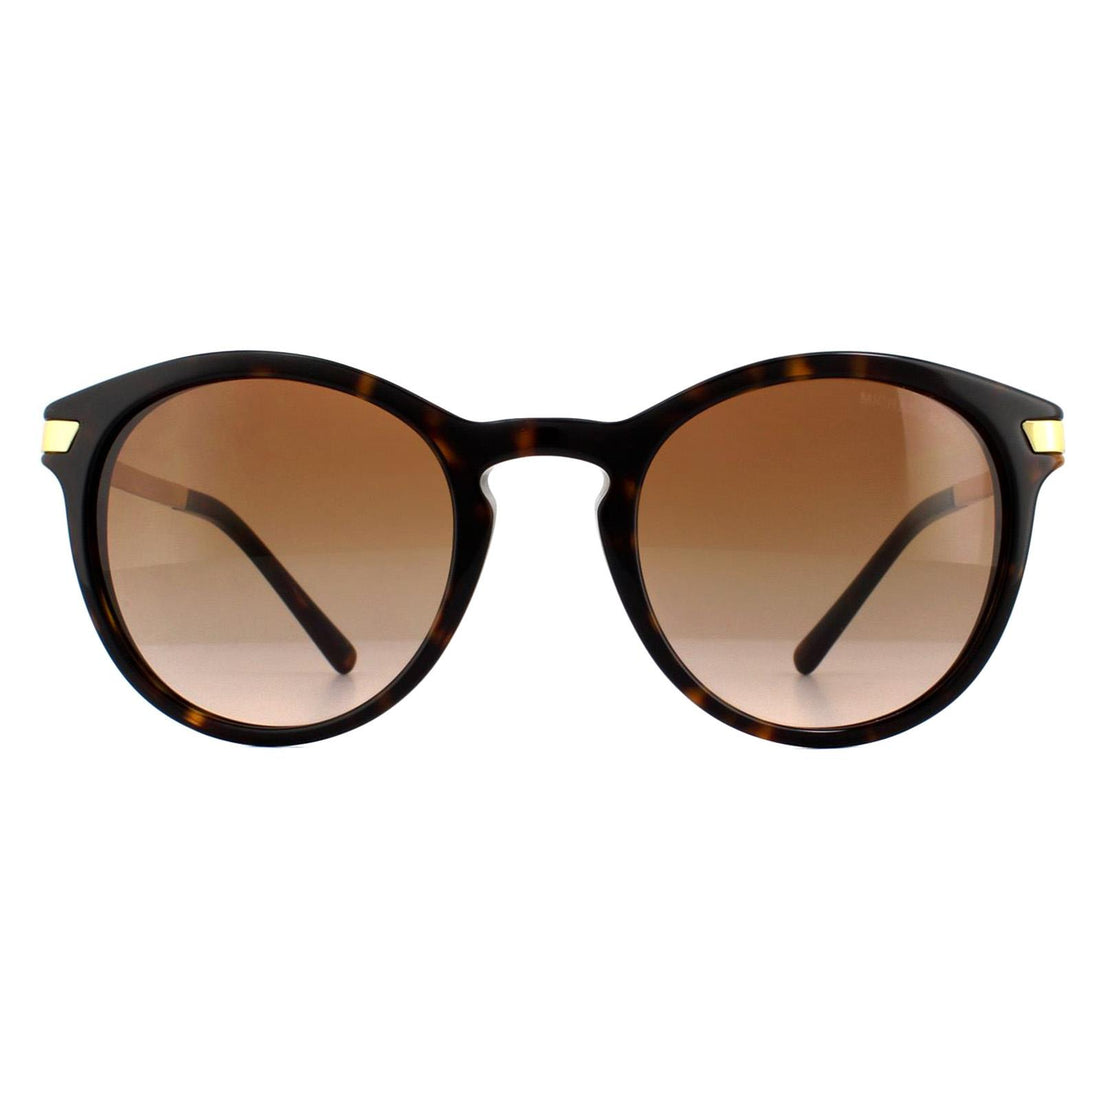 Michael Kors Adrianna III MK2023 Sunglasses Havana with gold arms Brown Gradient